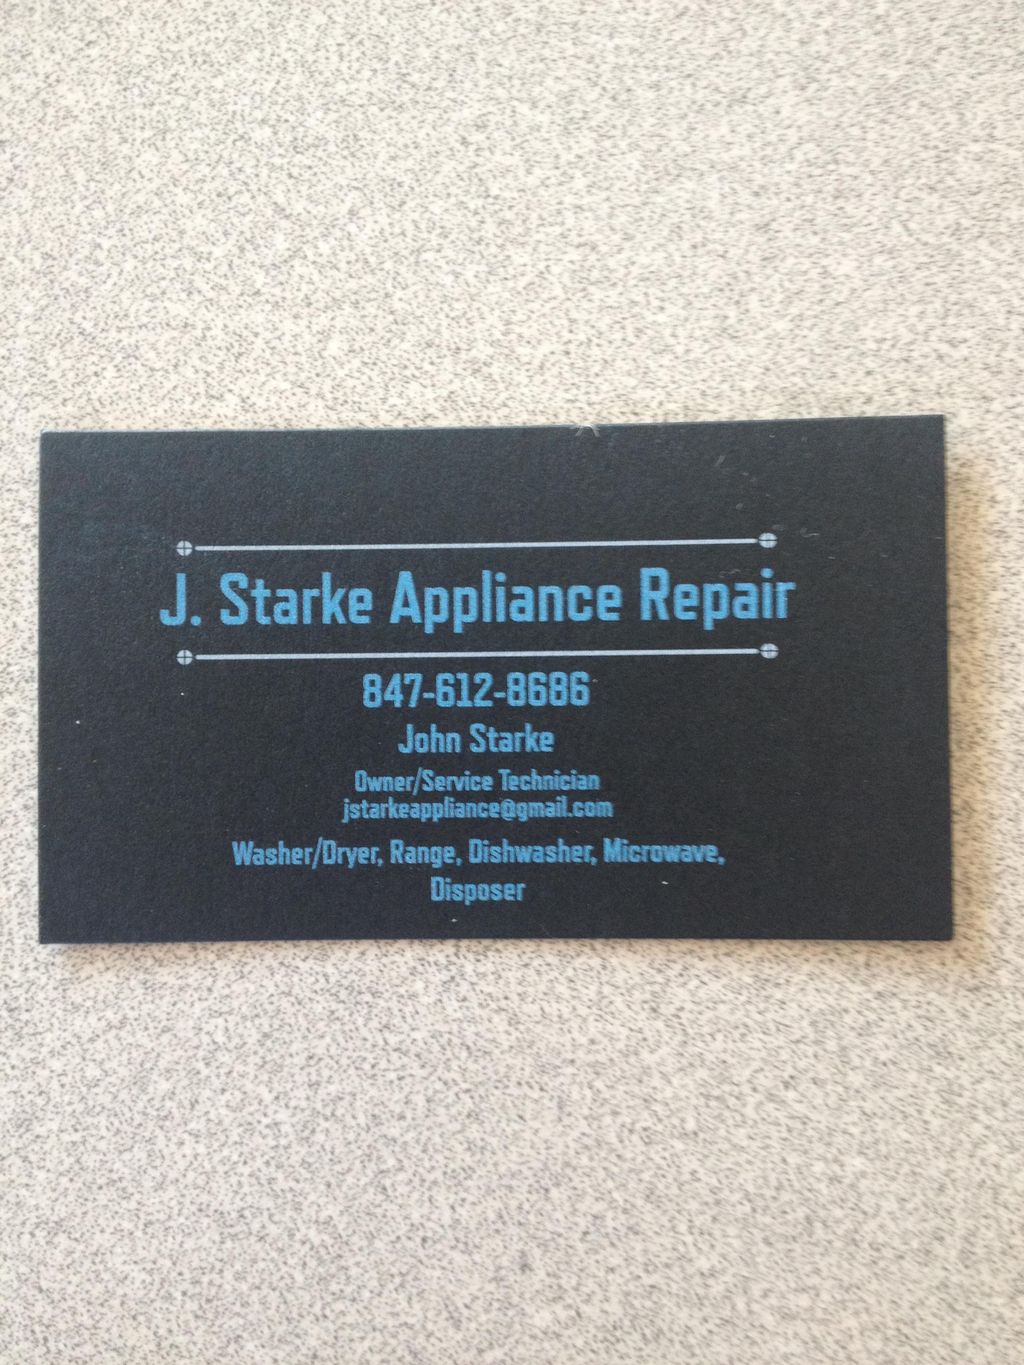 J. Starke Appliance Repair